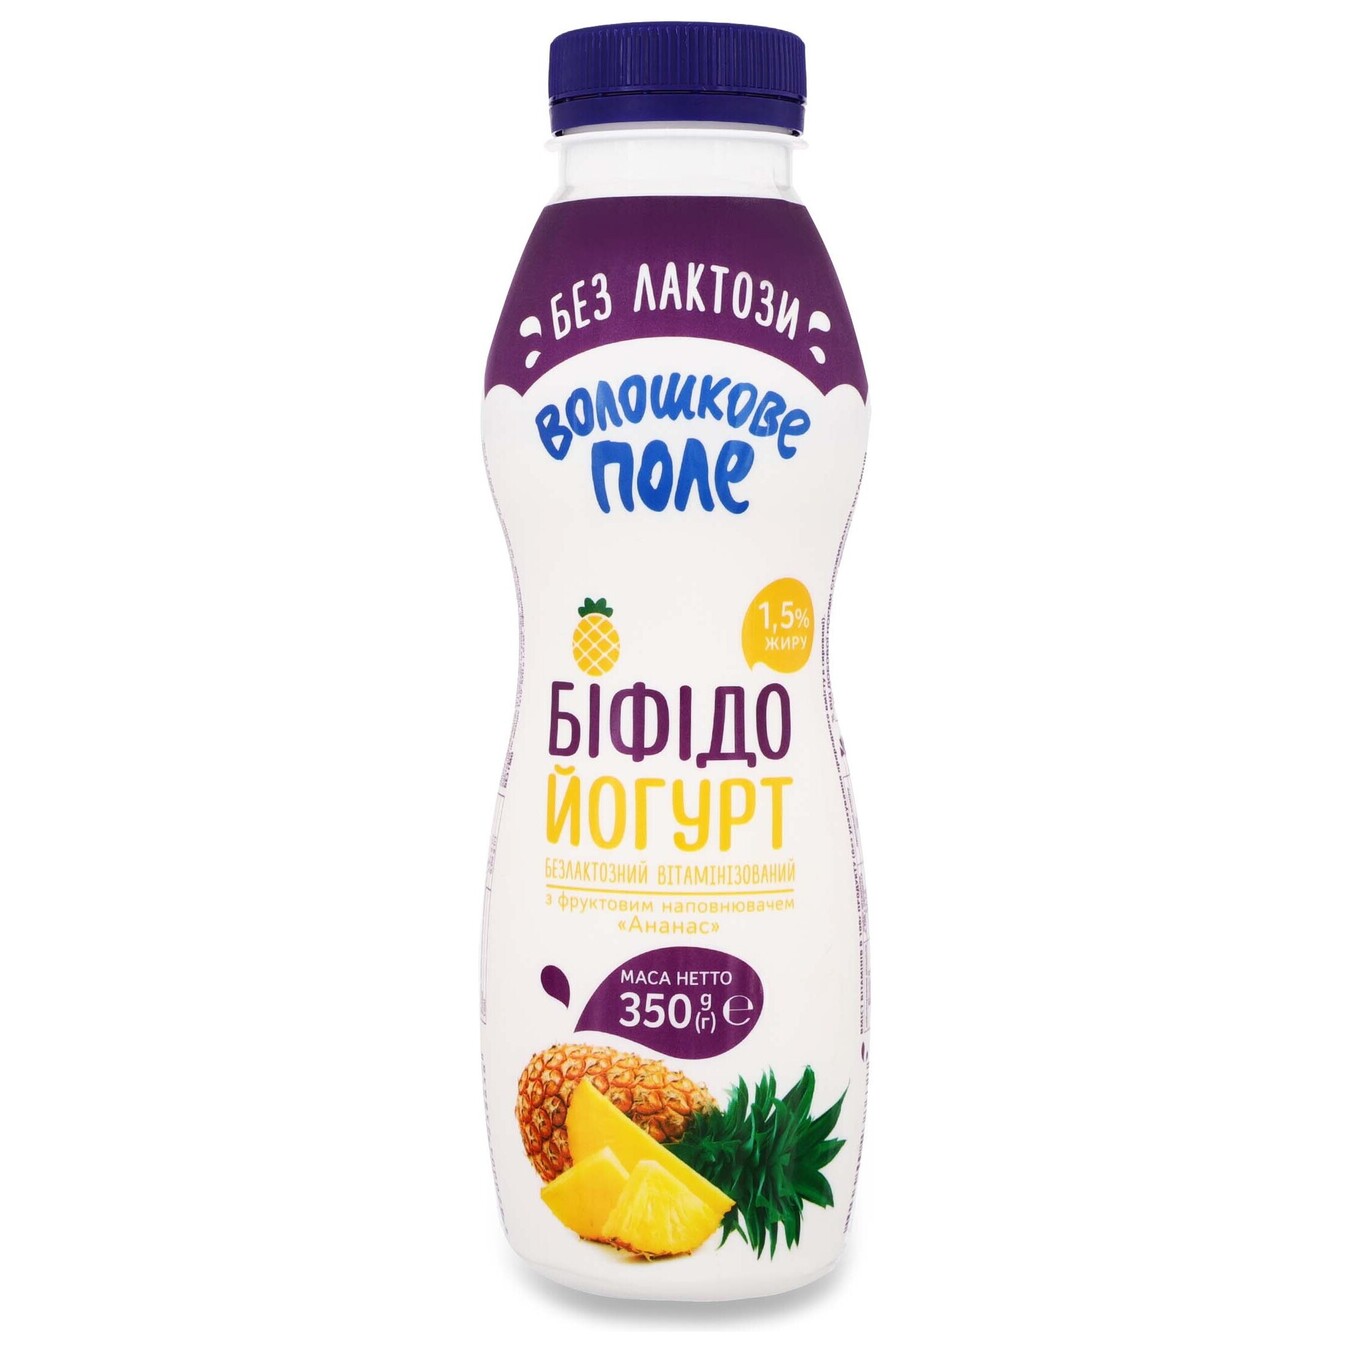 Voloshkove Pole Bifidoyogurt Pineapple lactose-free 1,5% 350g